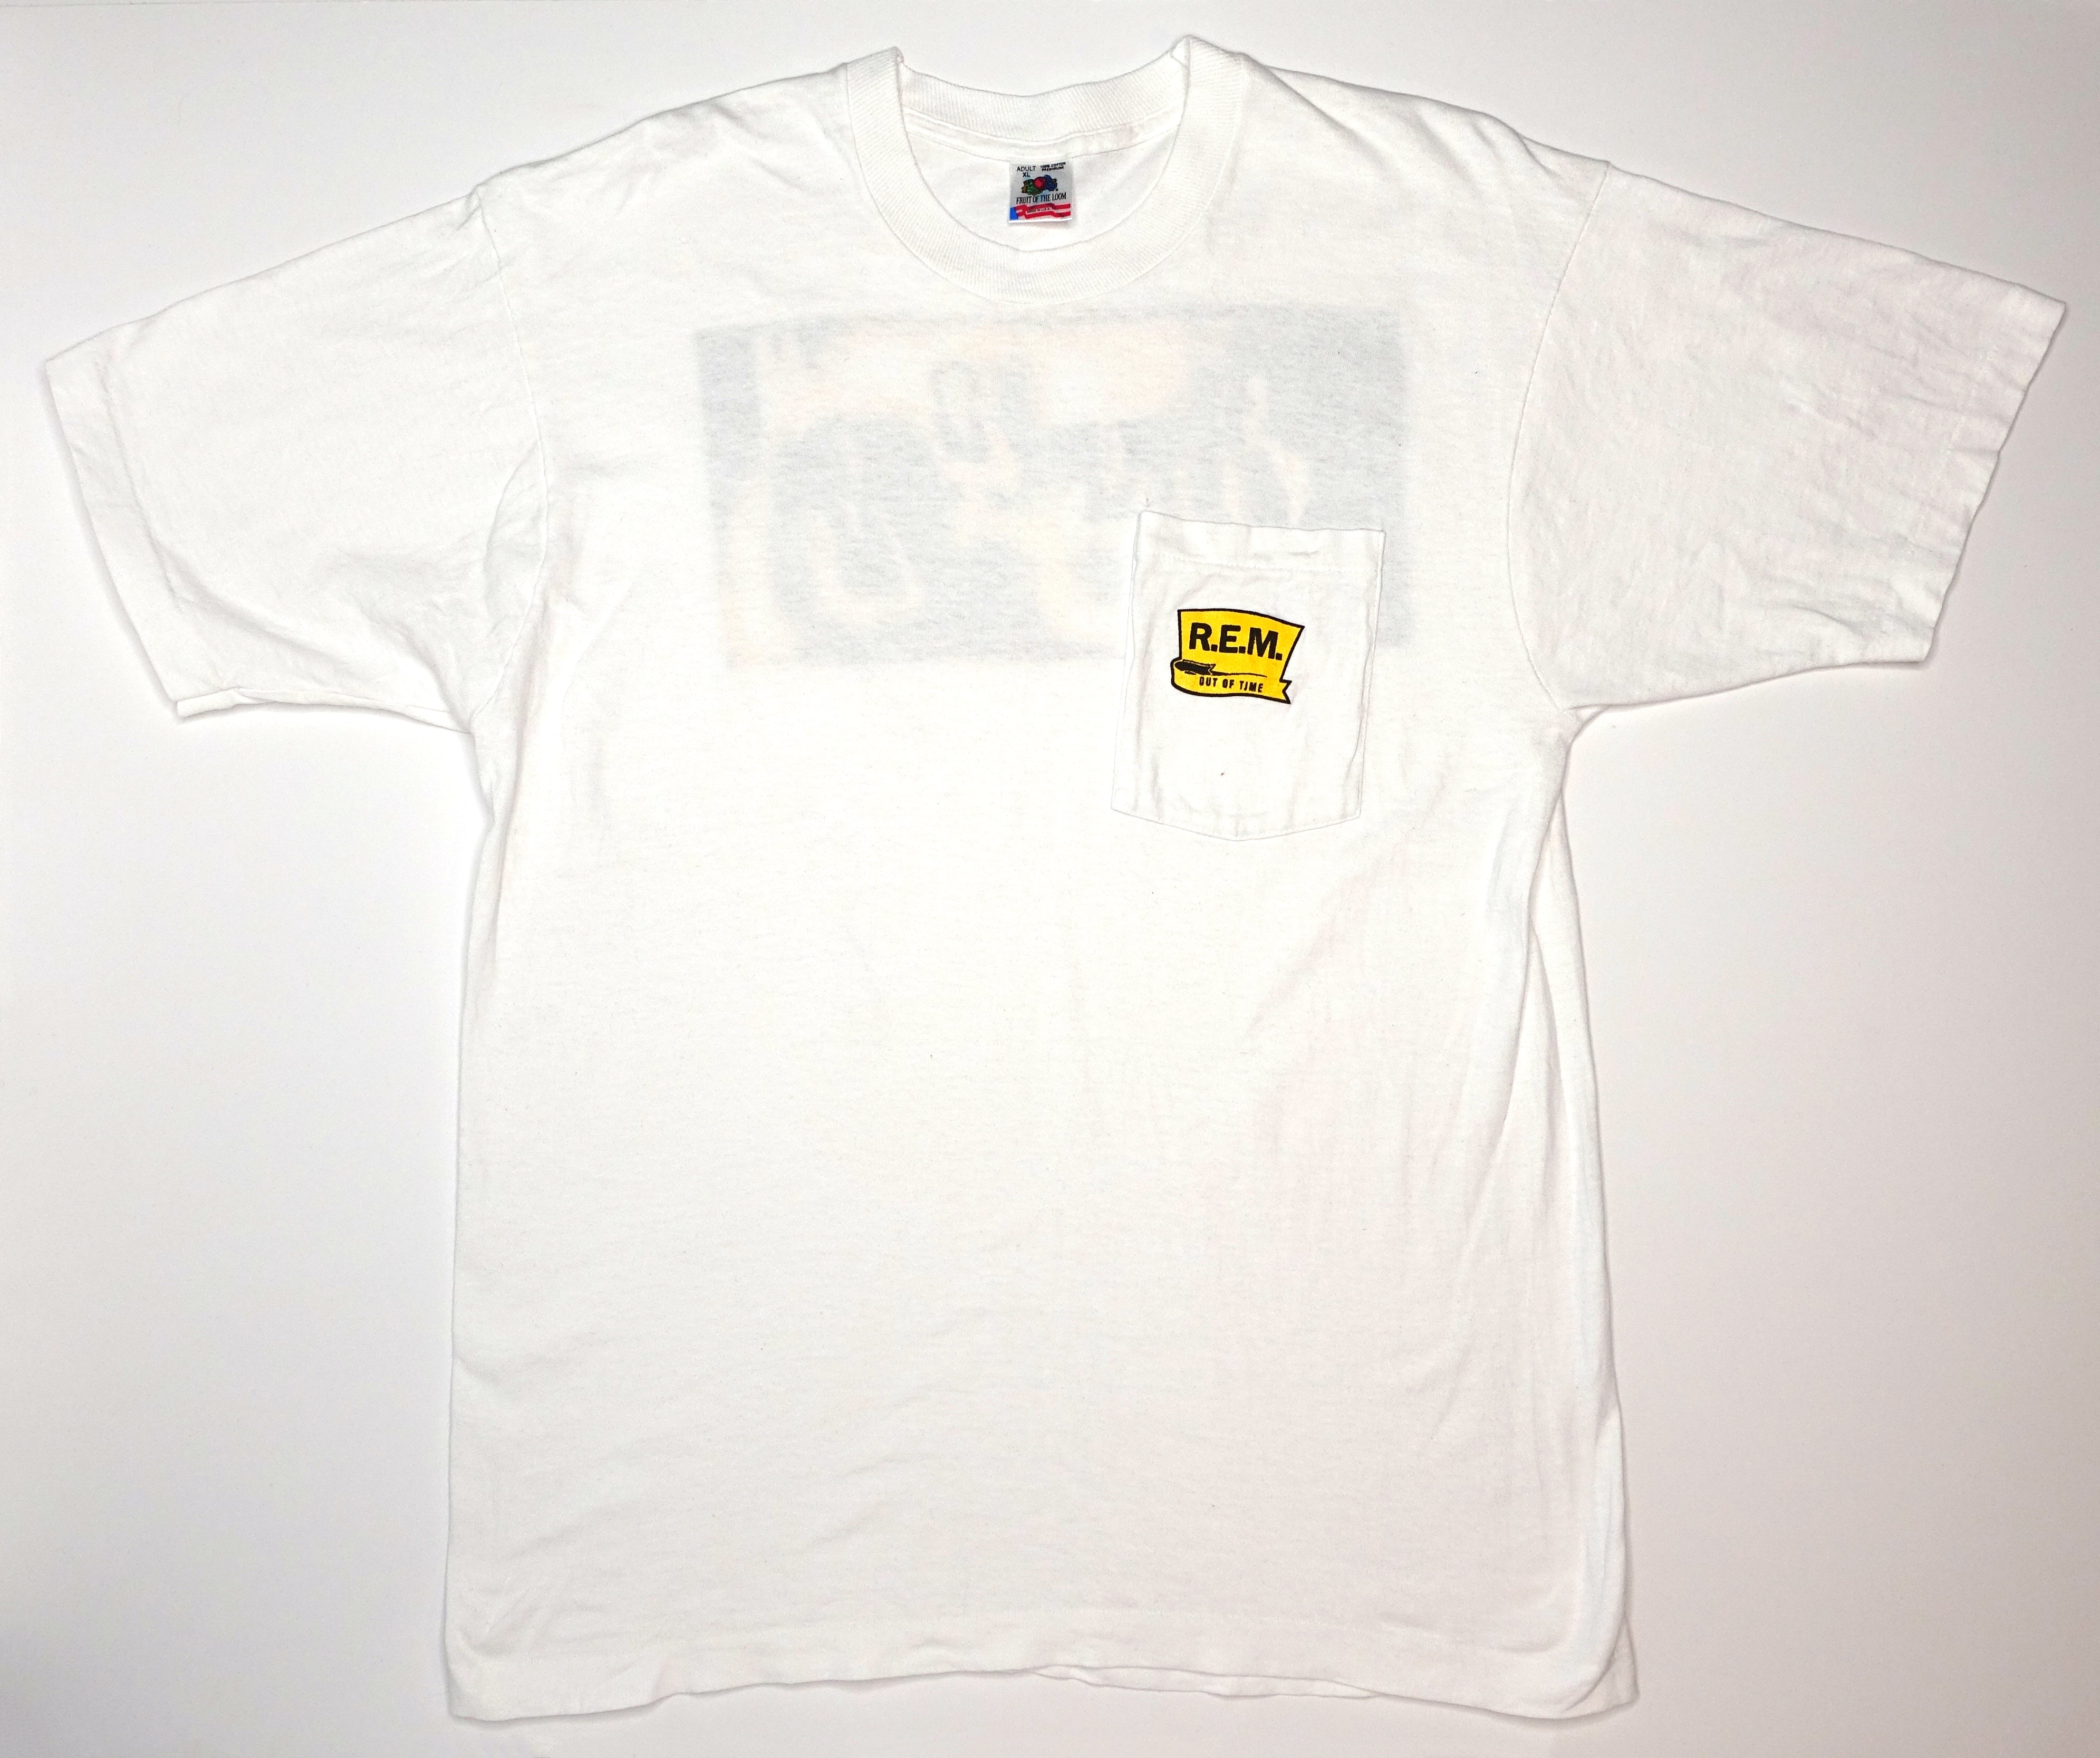 Inside Out band retro t-shirt, double sides unisex t-shirt TE2019